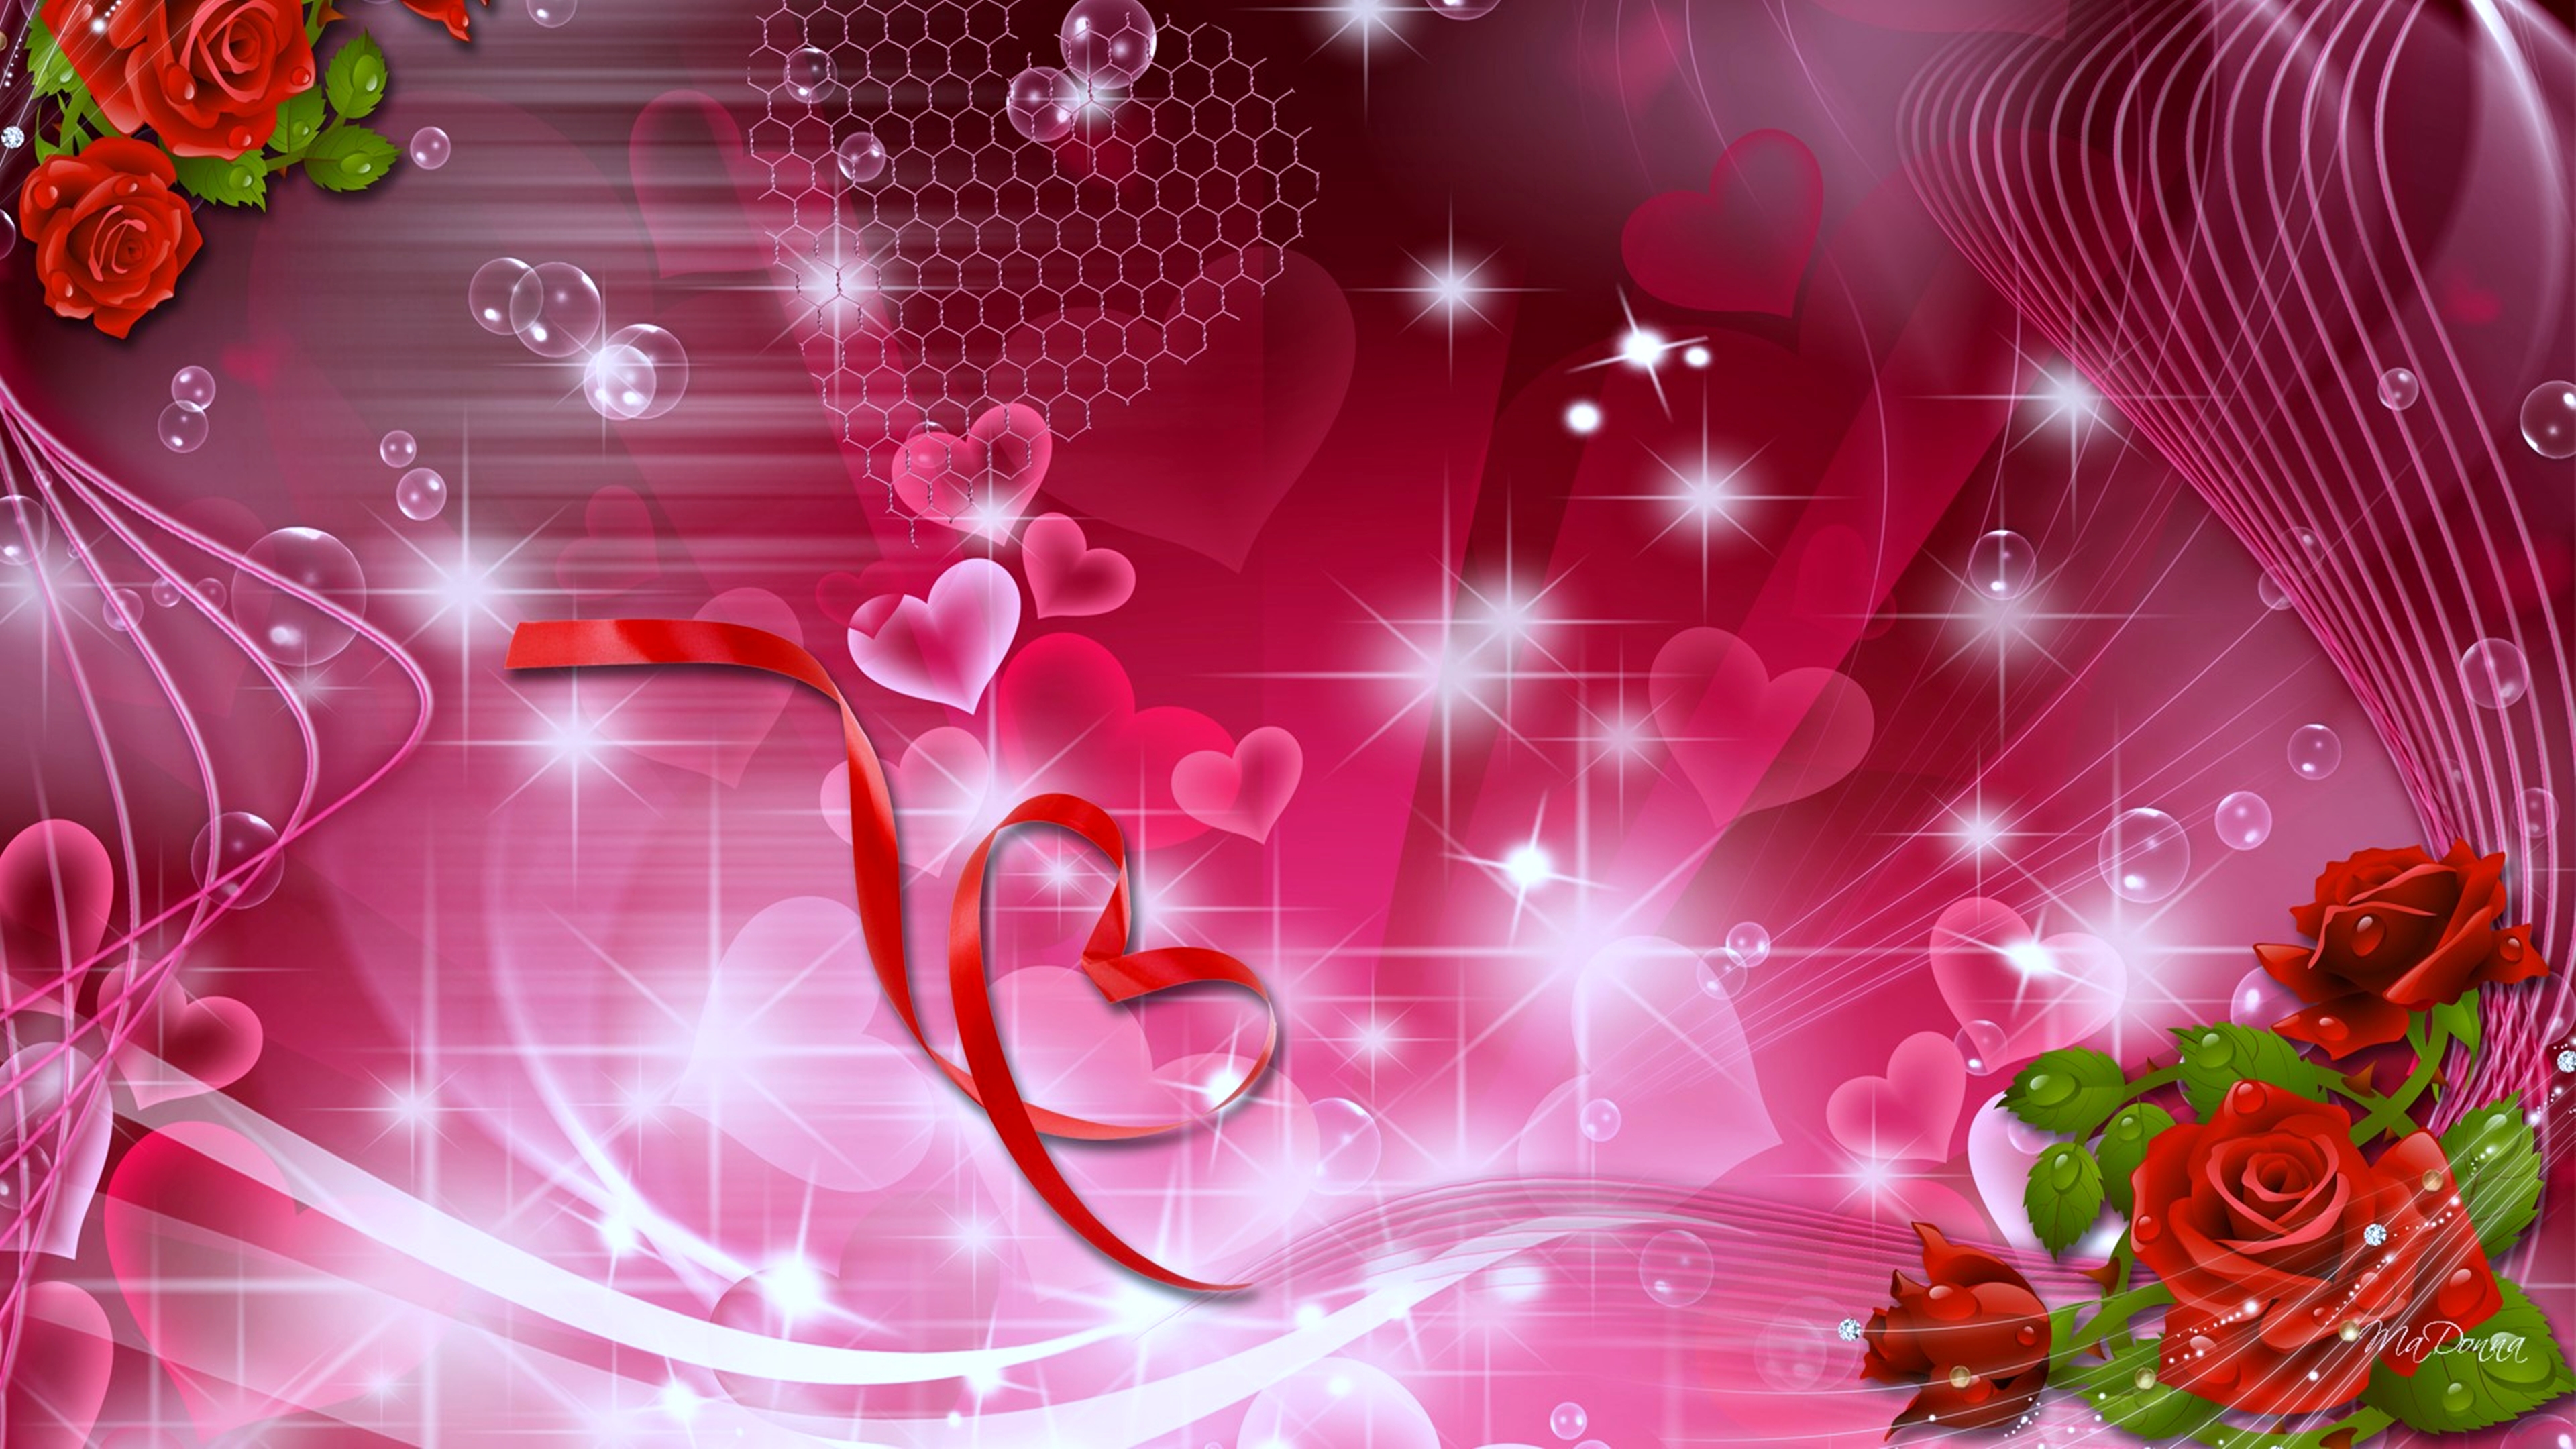 Mobile wallpaper love, heart, rose, artistic, romantic